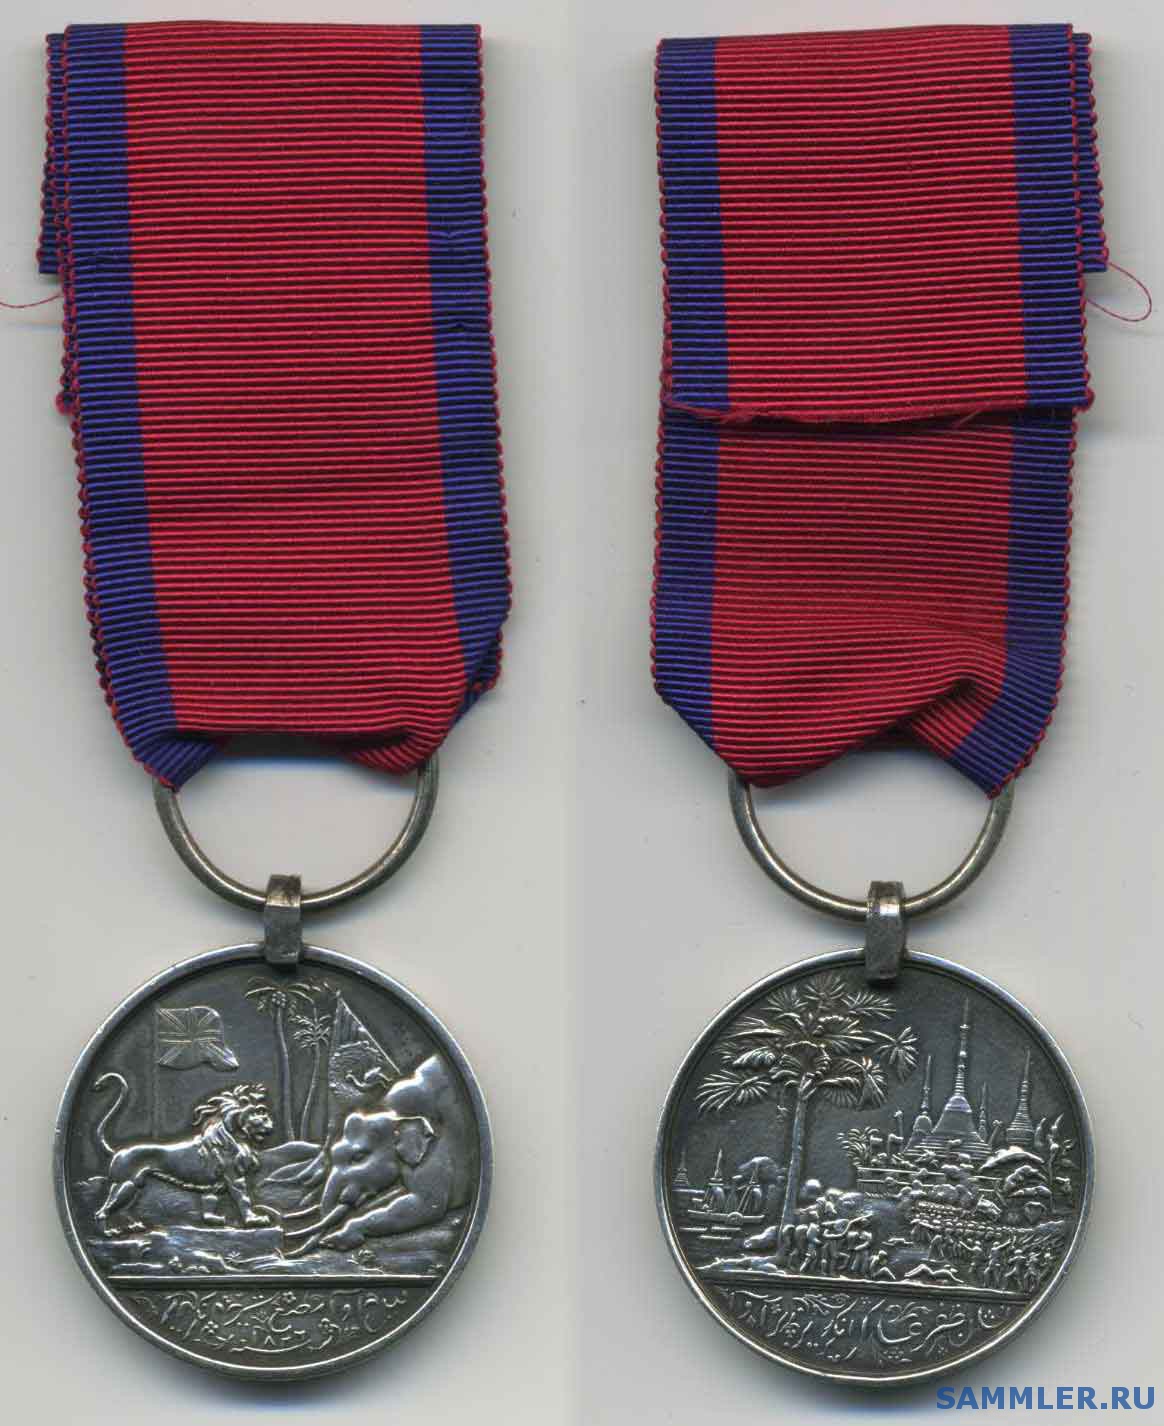 Burma_medal_1826.jpg